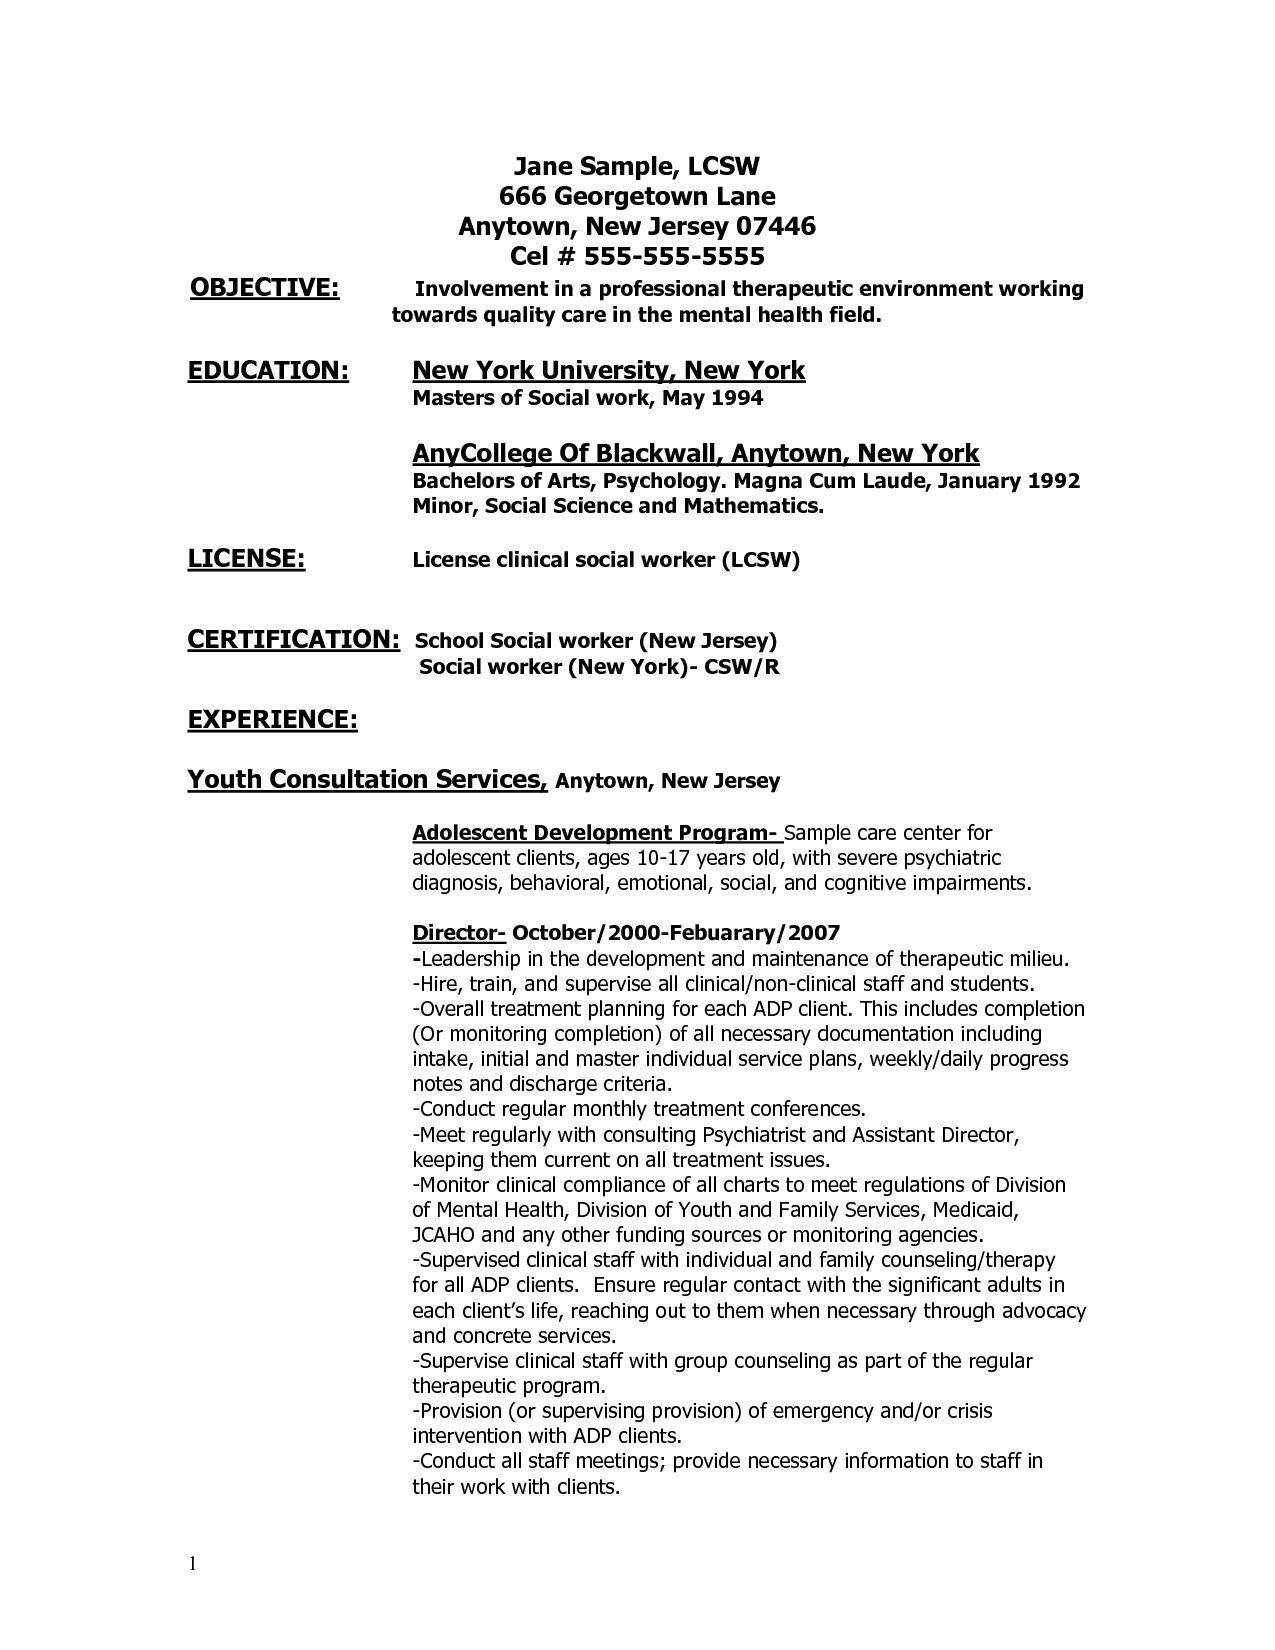 Sample Resume Objective for Masters Program 75 Inspiring Photos Of Resume Objective Examples for An Internship …